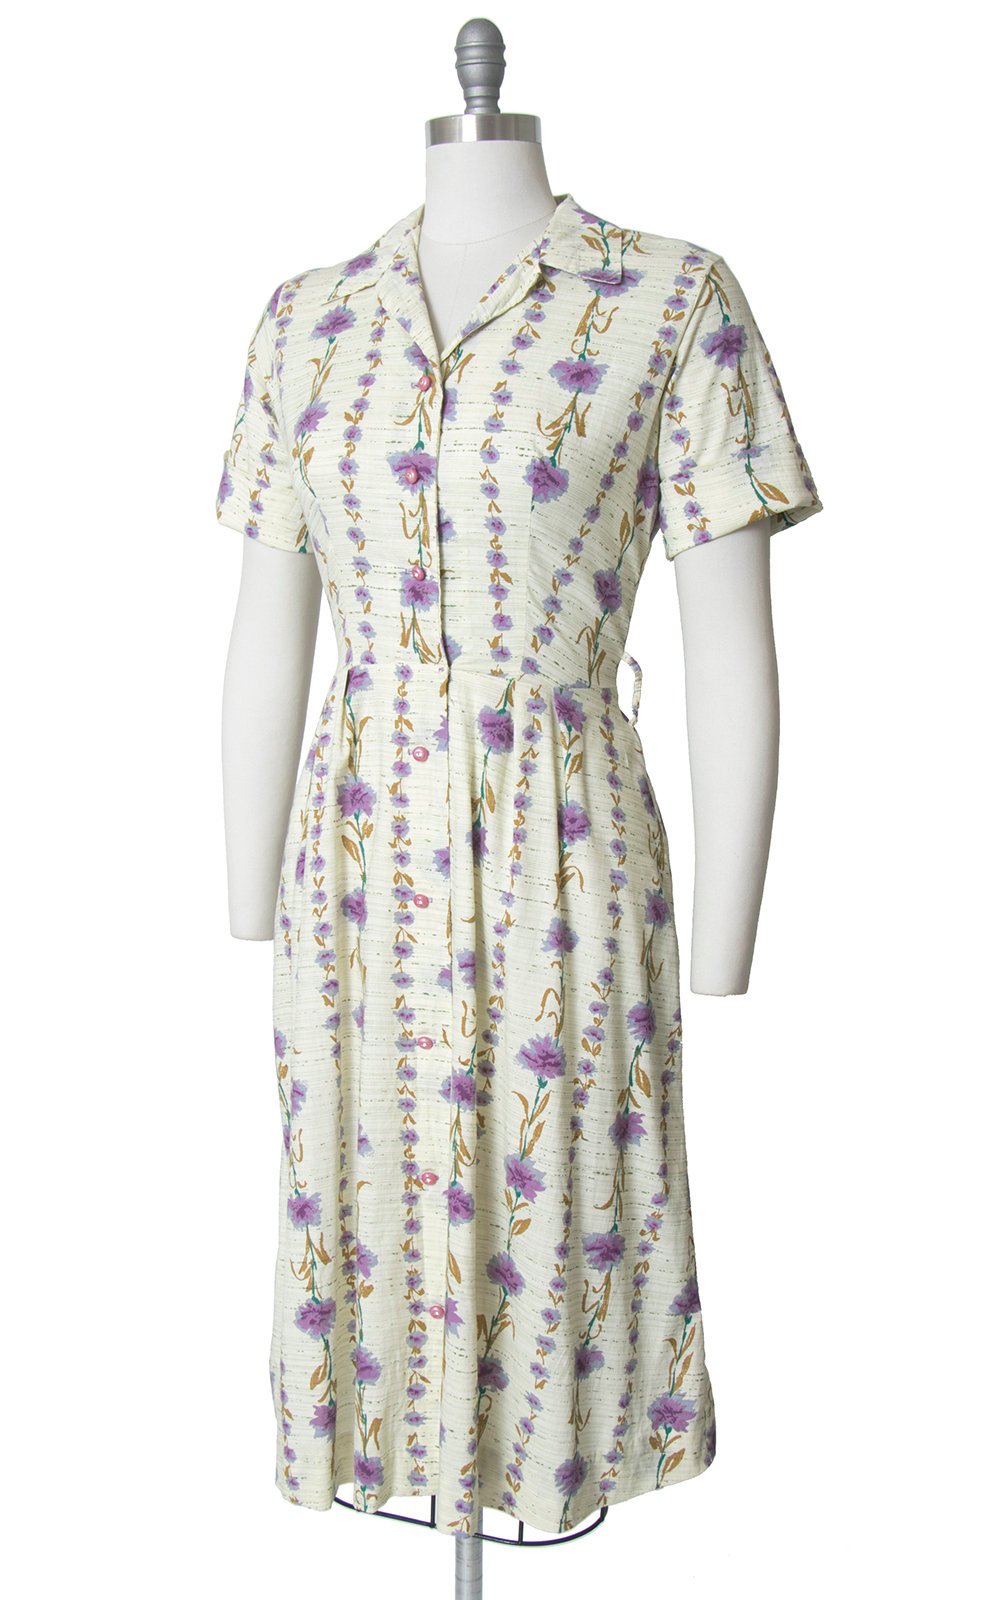 Vintage 1940s Dress | 40s Carnation Floral Print Cotton Shirt Dress Cream Purple Striped Shirtwaist Day Dress (medium)